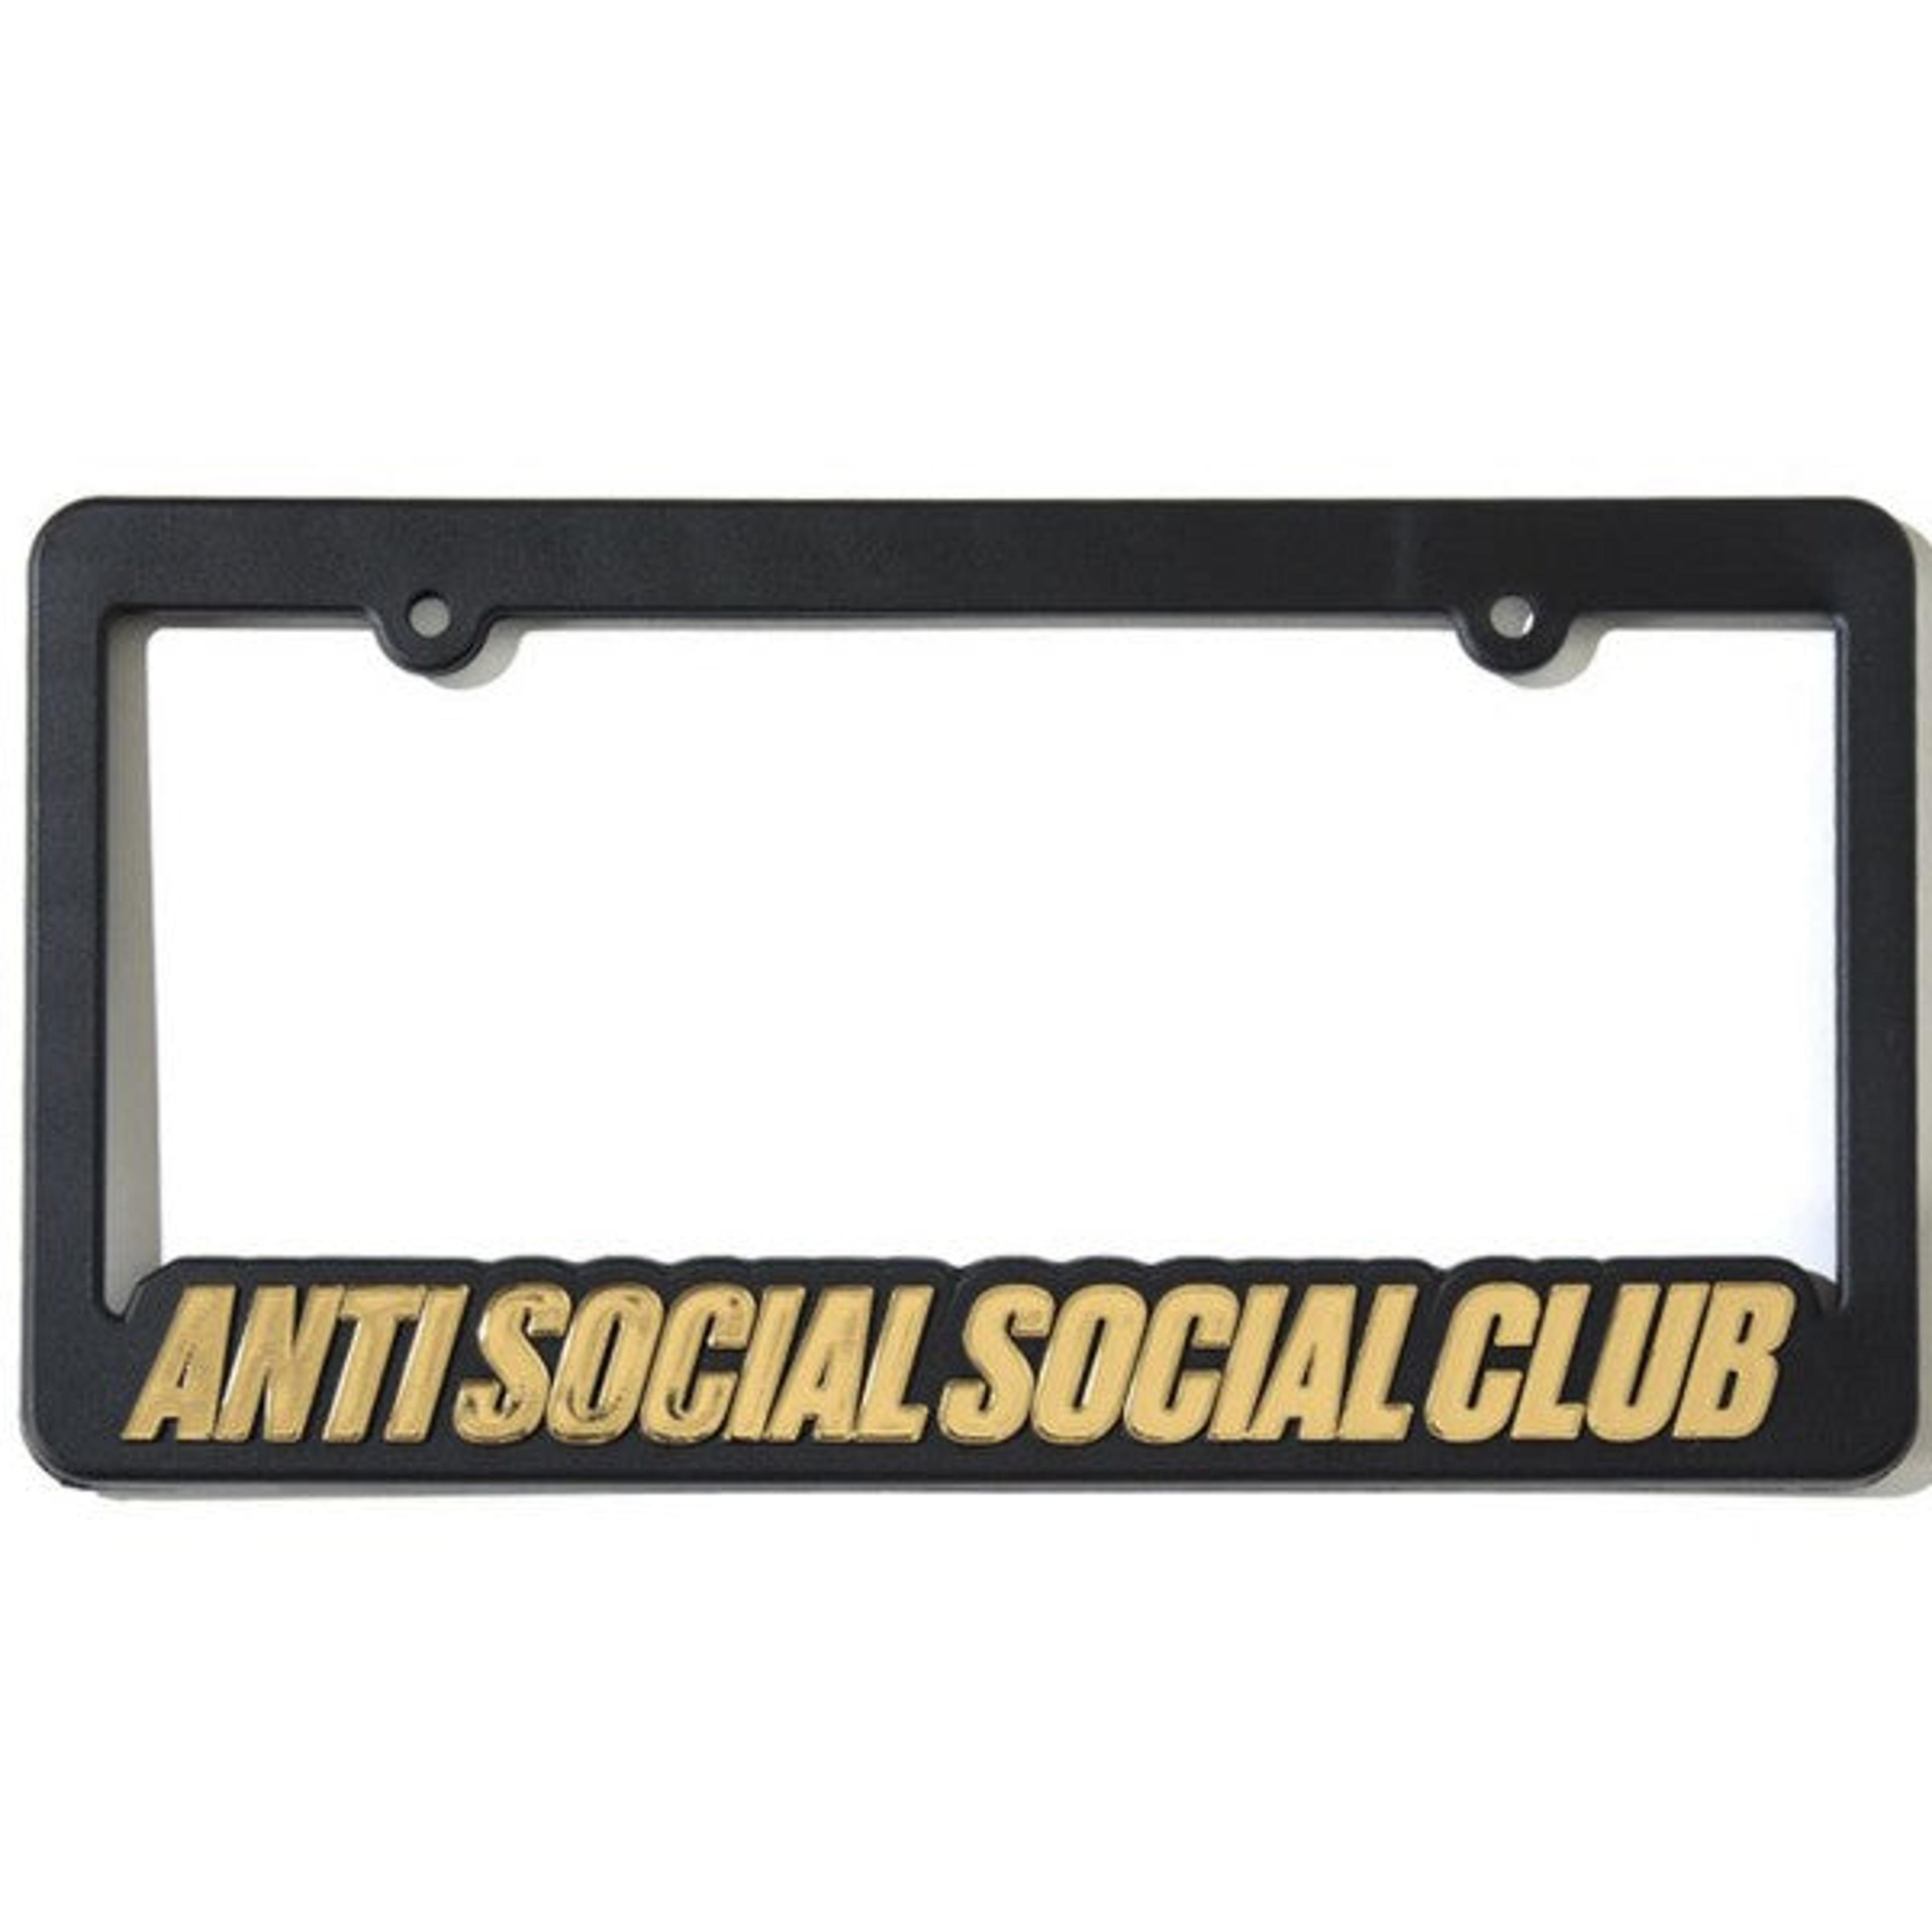 Anti Social Social Club License Plate Frame Gold black